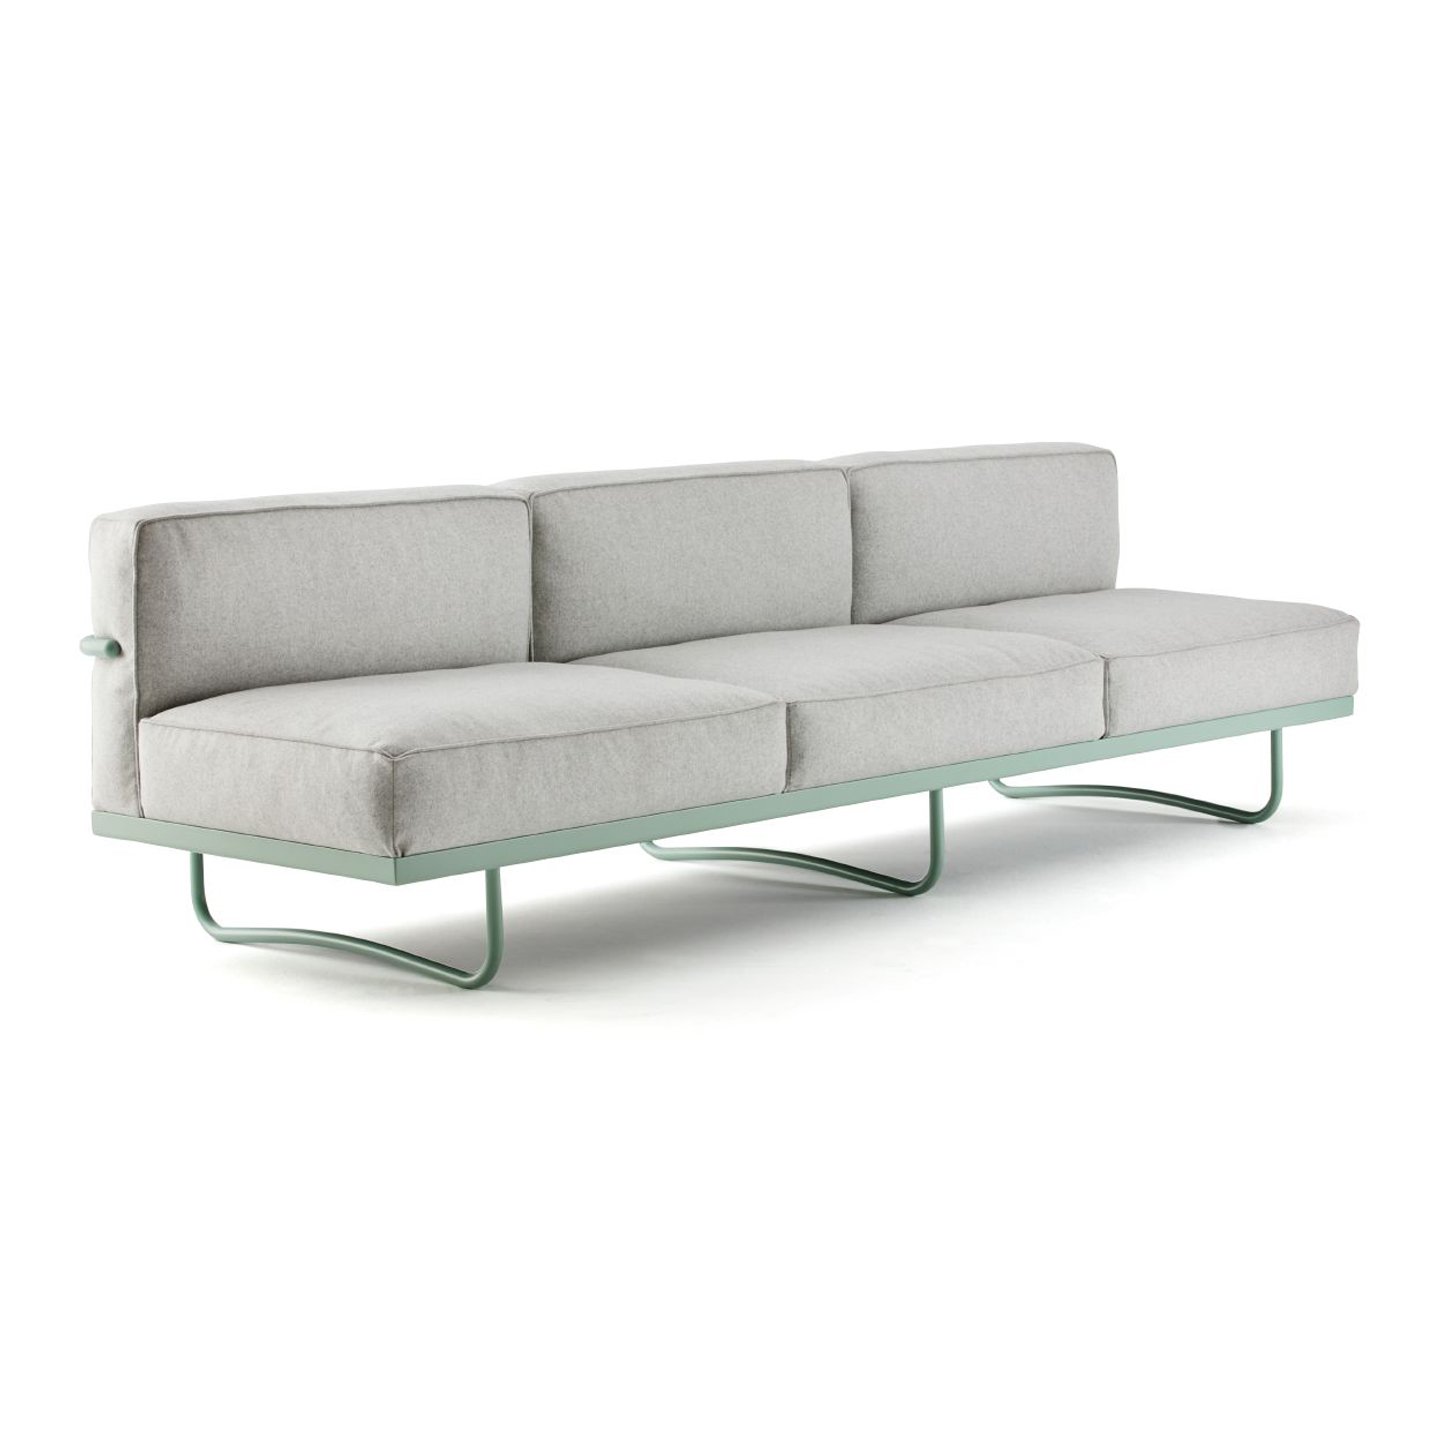 Haworth LC5 three seater lounge sofa in grey color